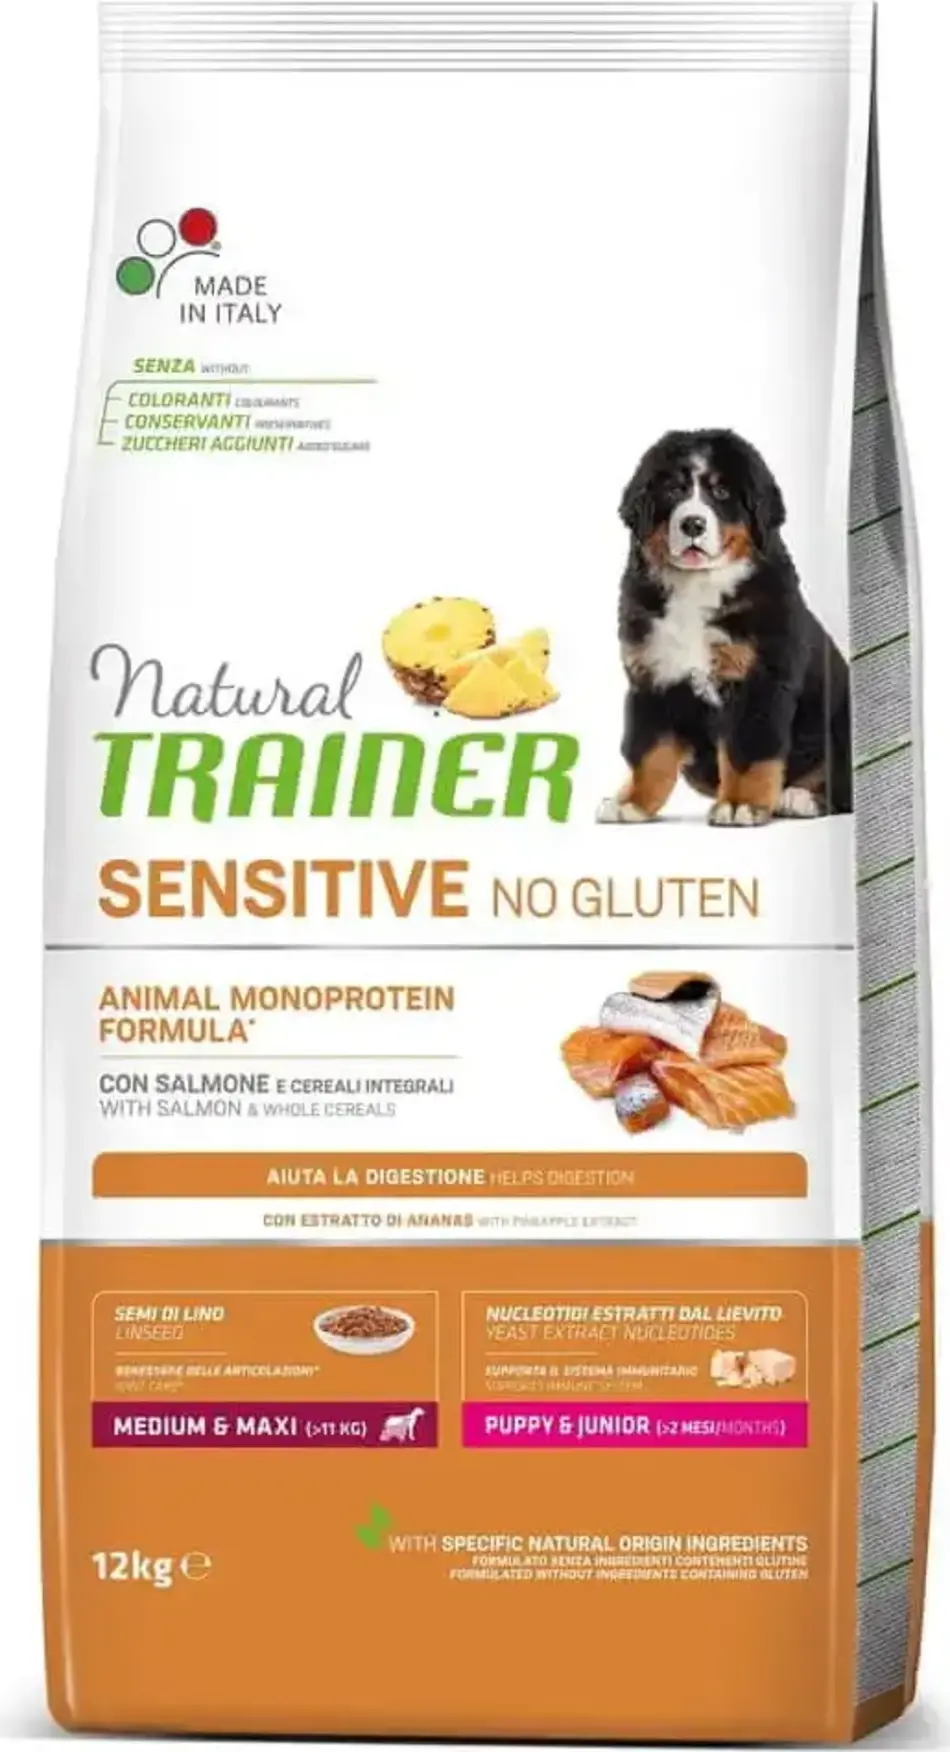 Trainer Natural Sensitive No Gluten Puppy & Junior Medium & Maxi Salmon 12 kg